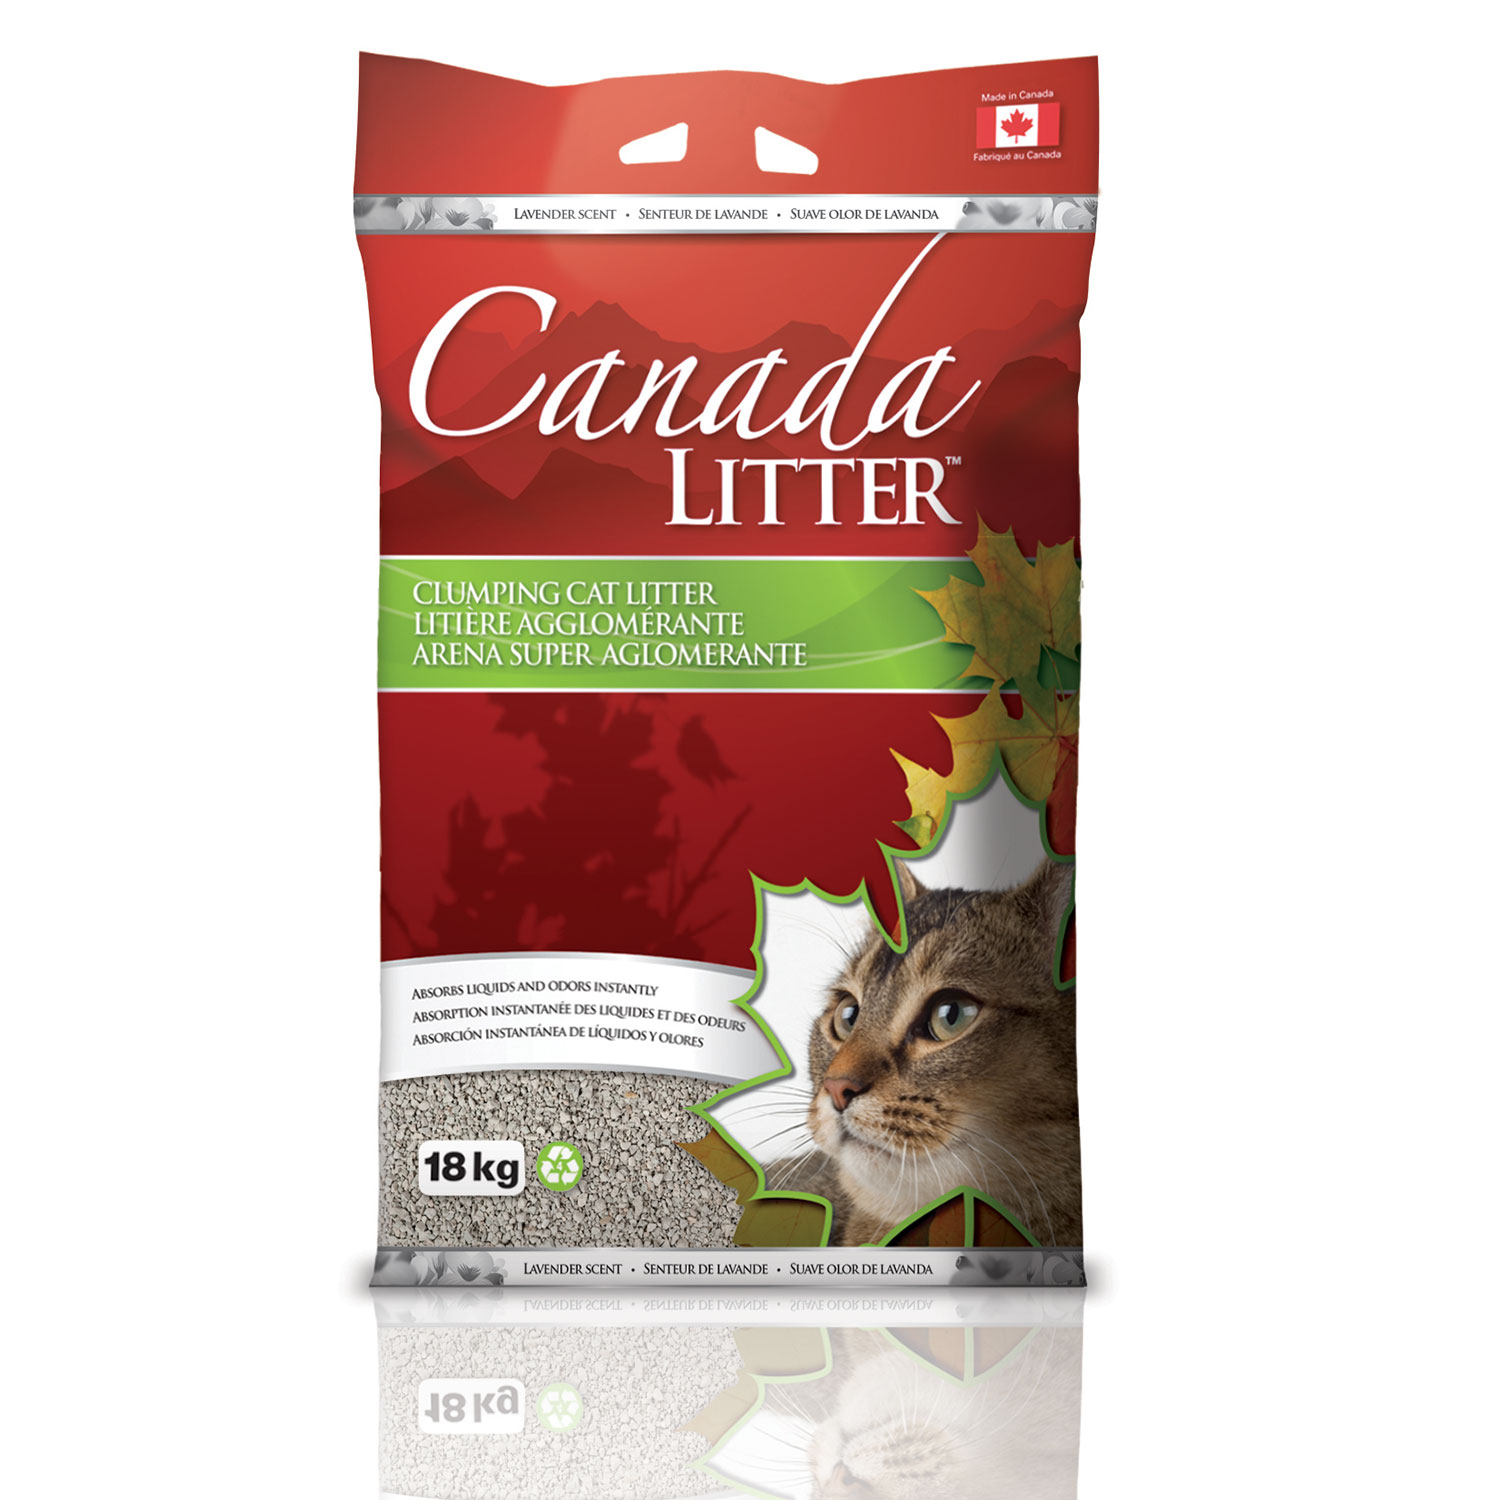 Canada(Cat Litter) 18KG - Lavender